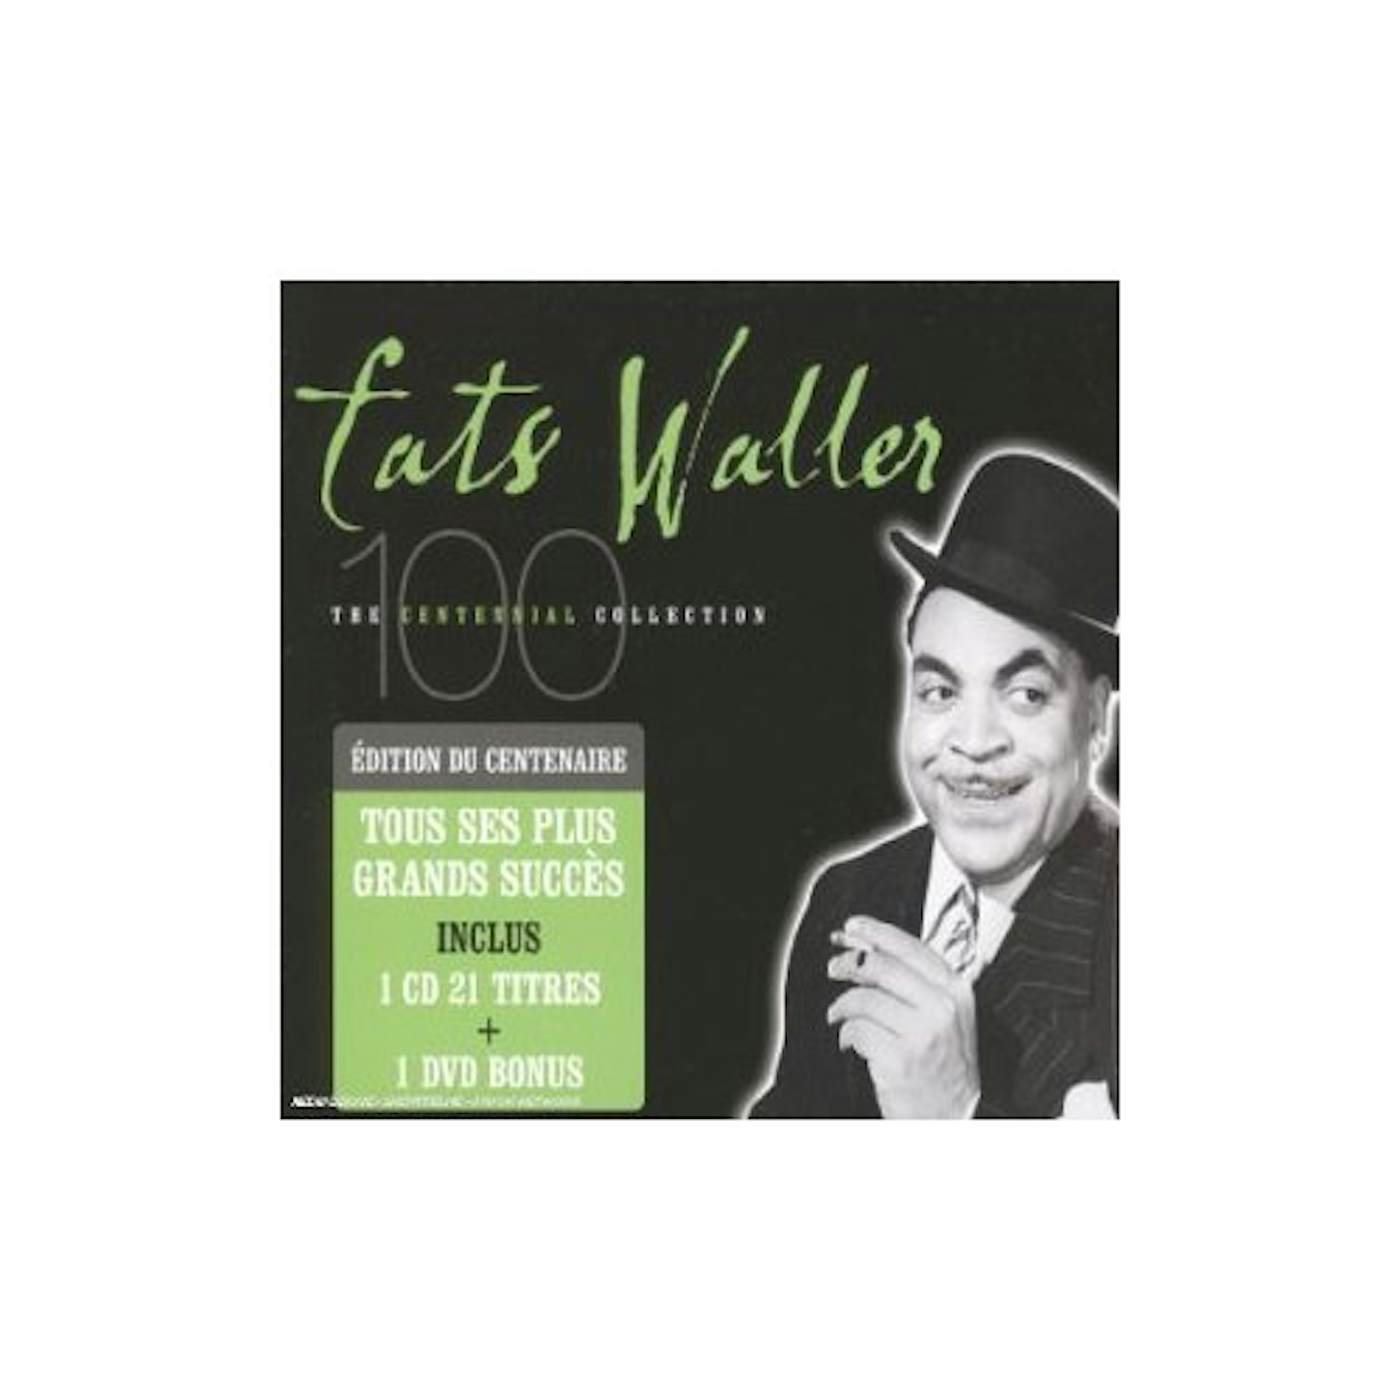 Fats Waller CENTENNIAL COLLECTION CD